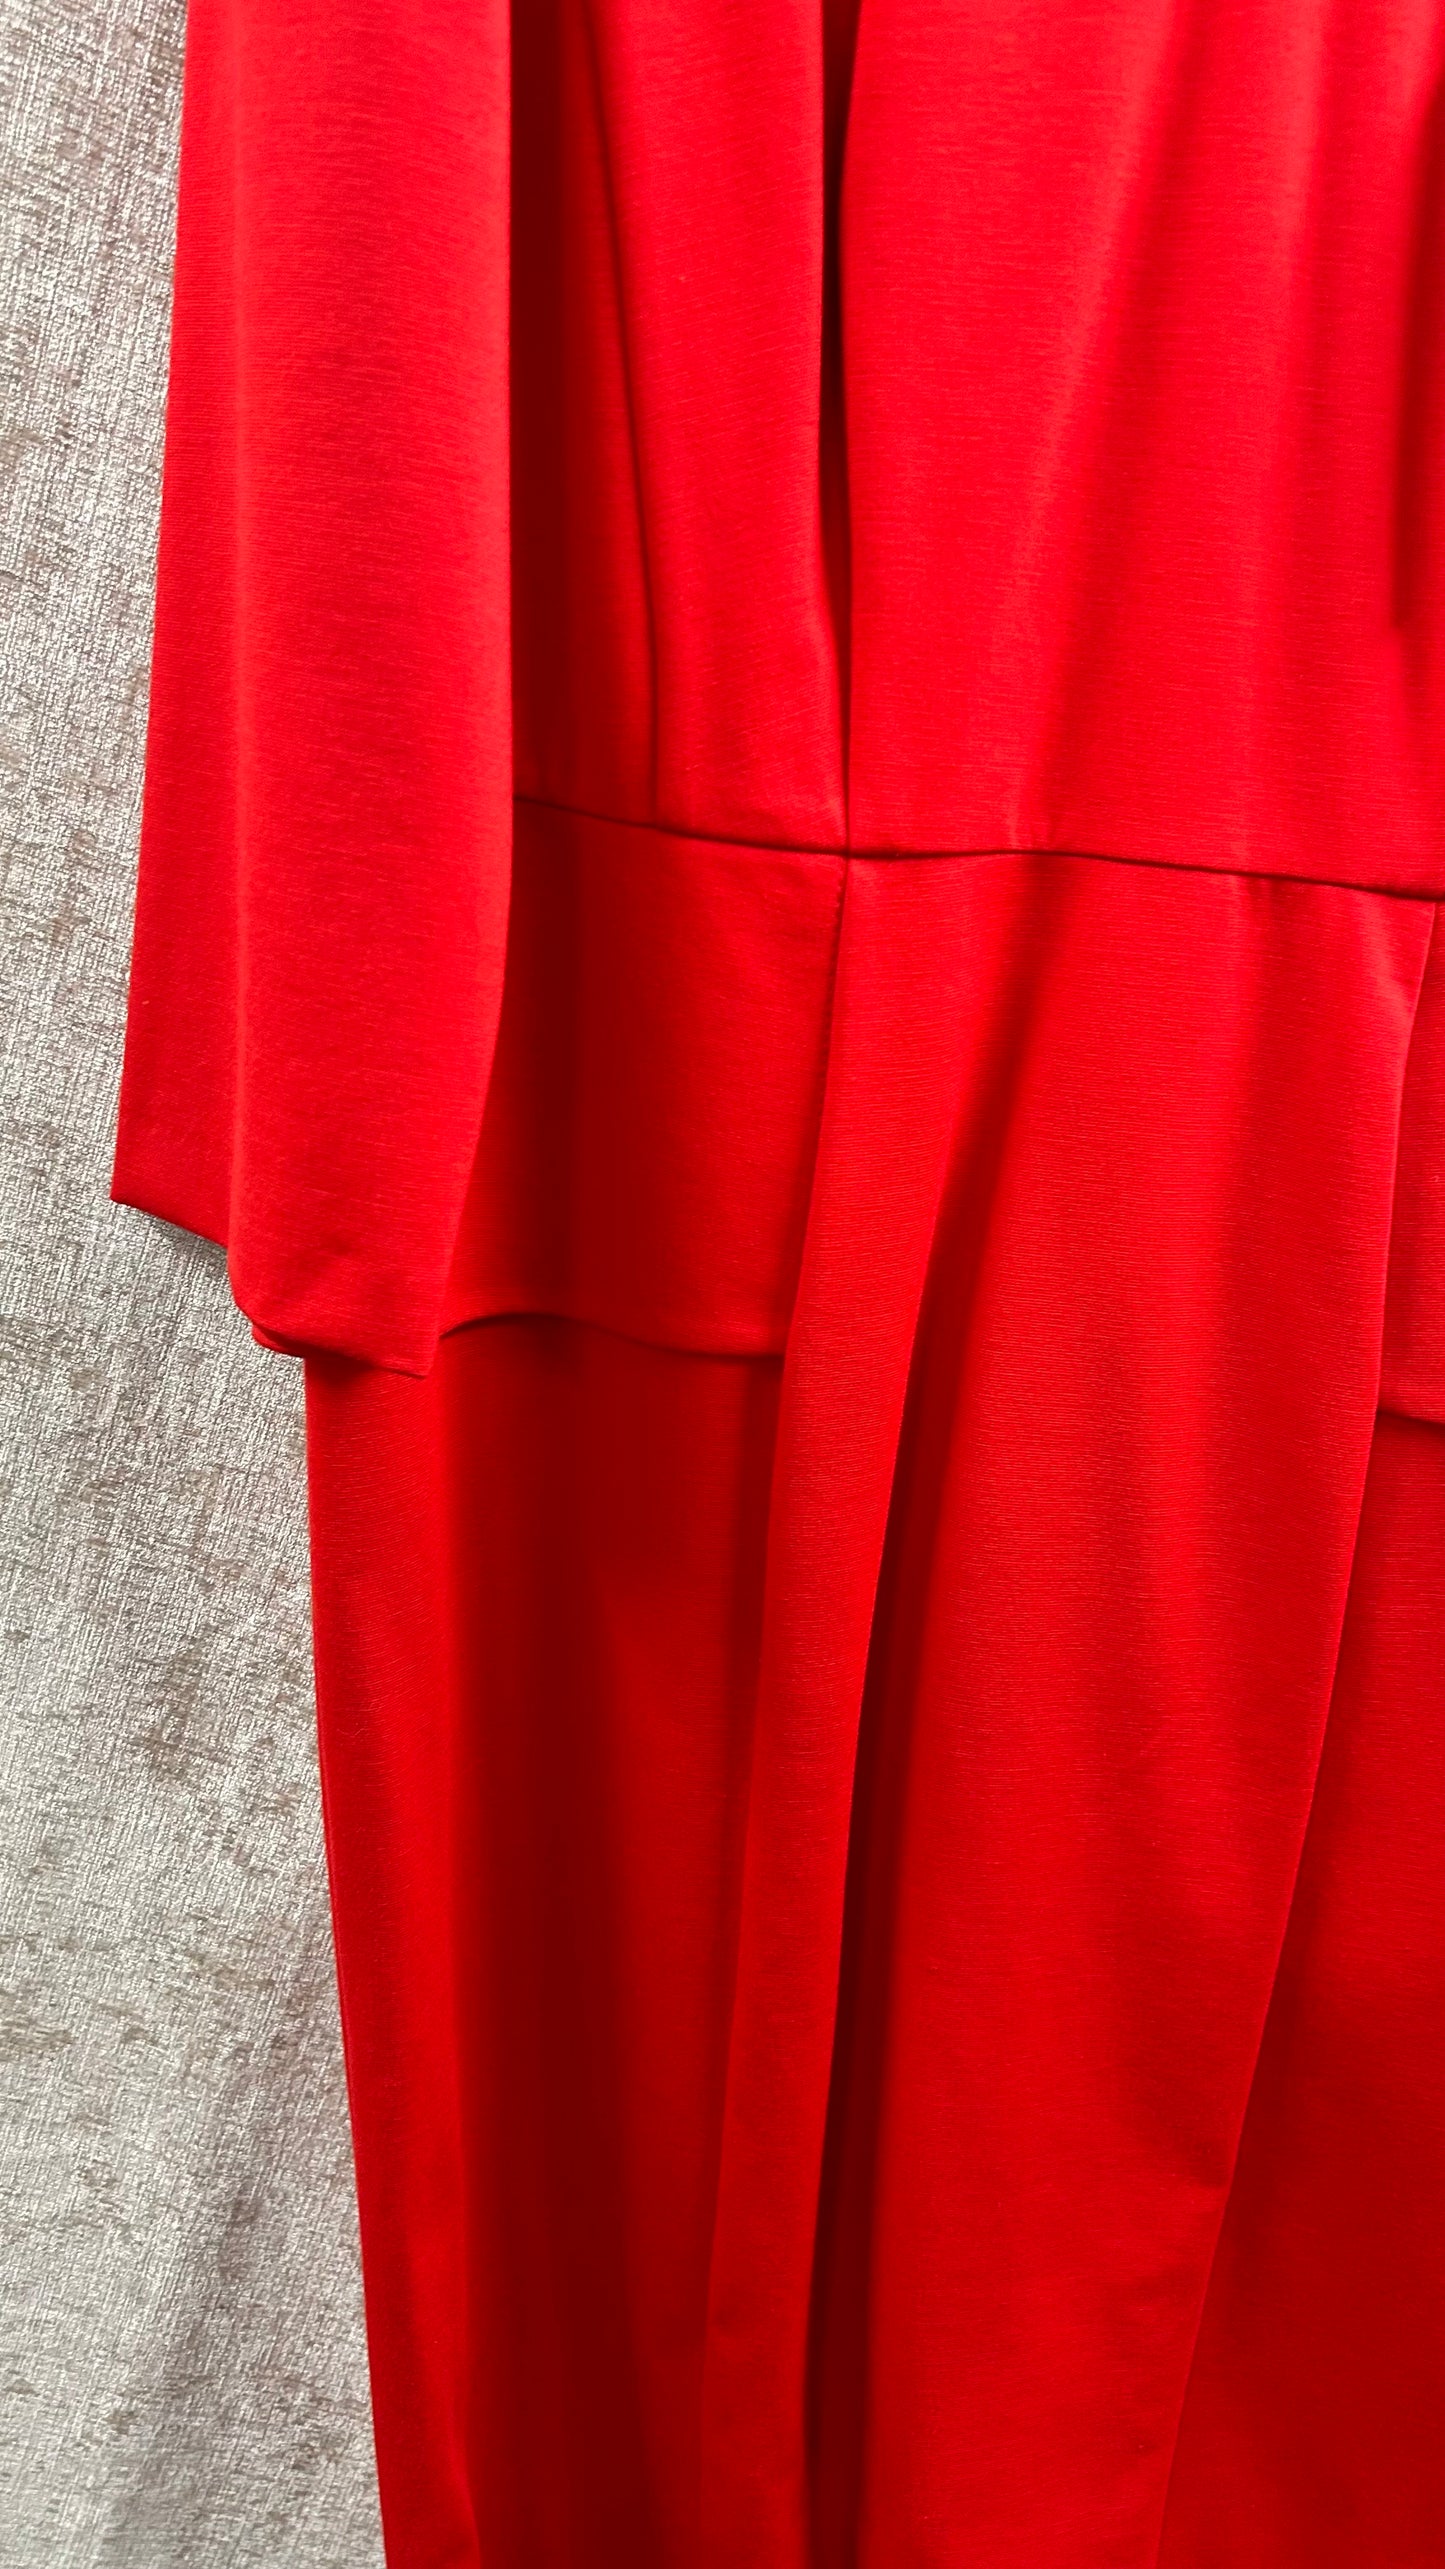 M&S Red Dress BNWT 16